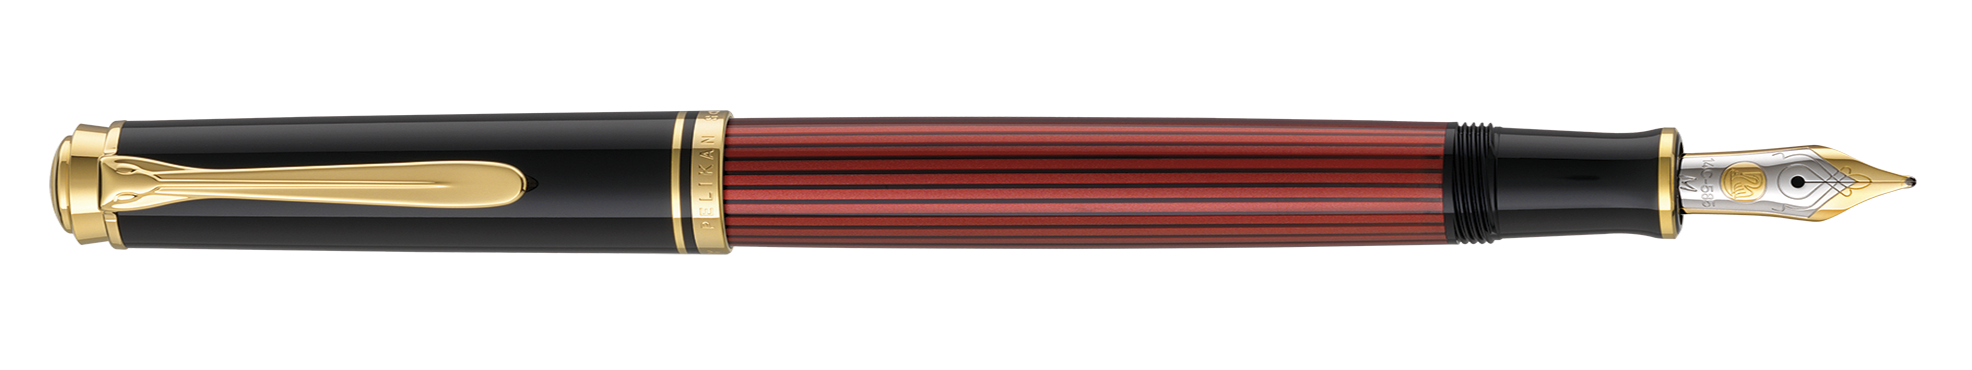 Souverän® 800 Black-Red